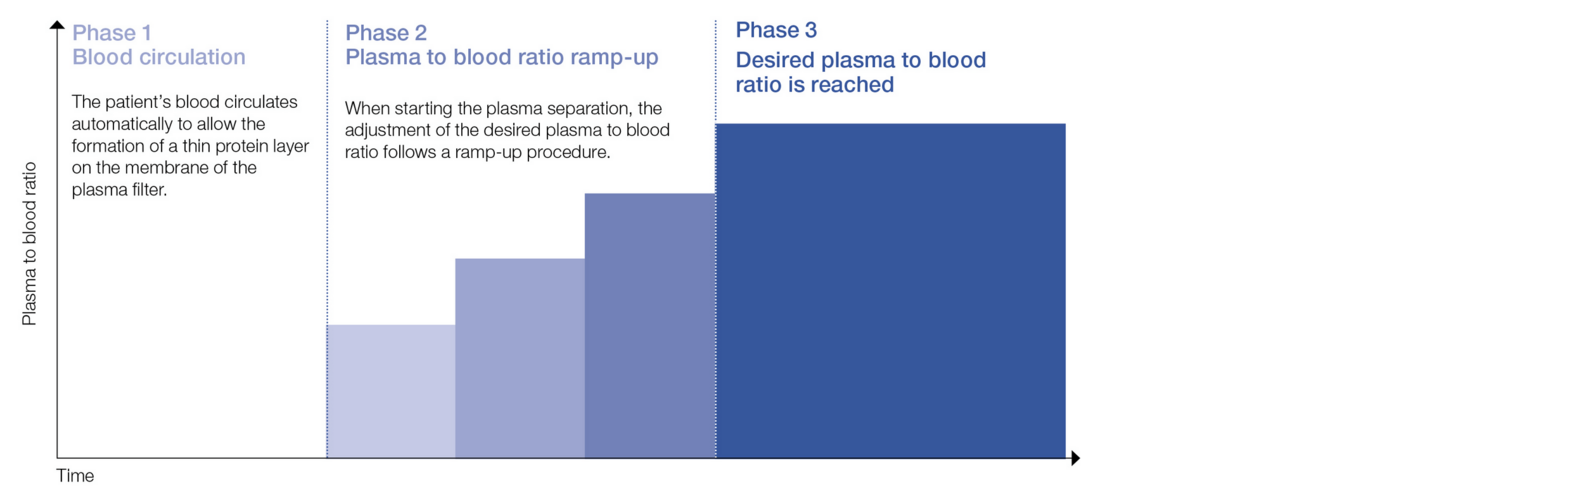 Plasma to blood ratio ramp-up